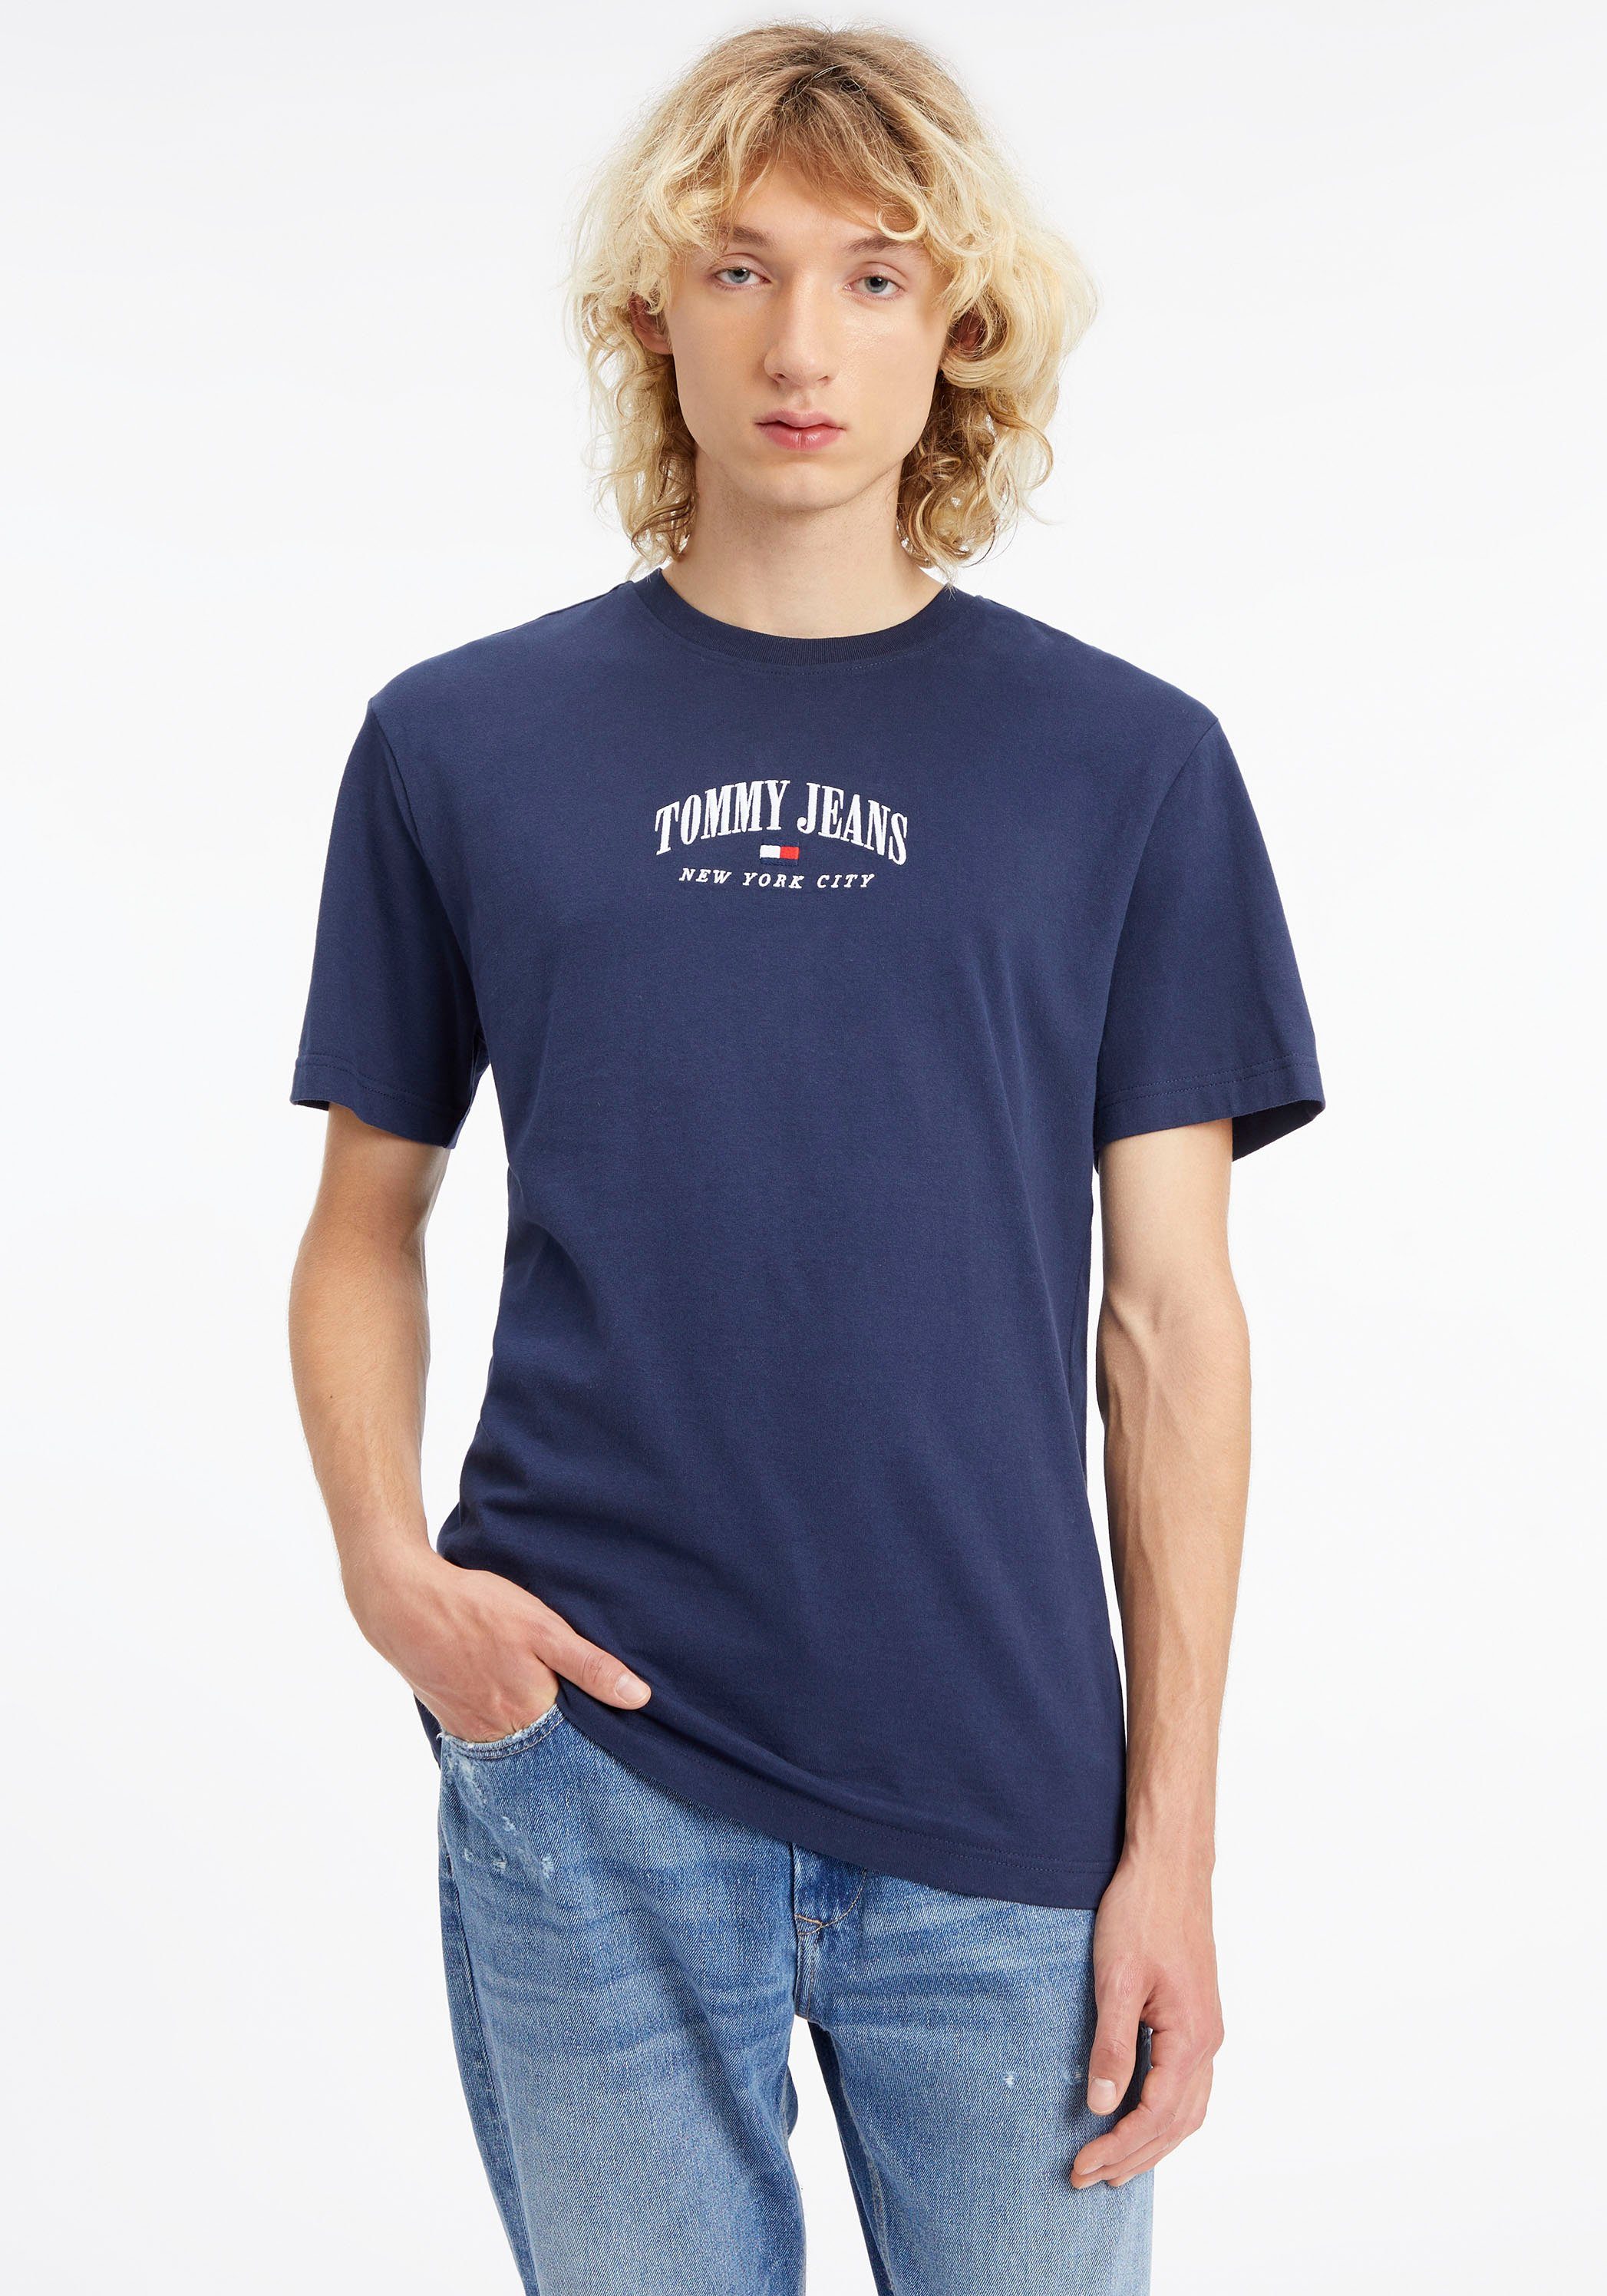 SMALL Twilight VARSITY Tommy Logostickerei Navy TEE Jeans TJM mit CLSC T-Shirt